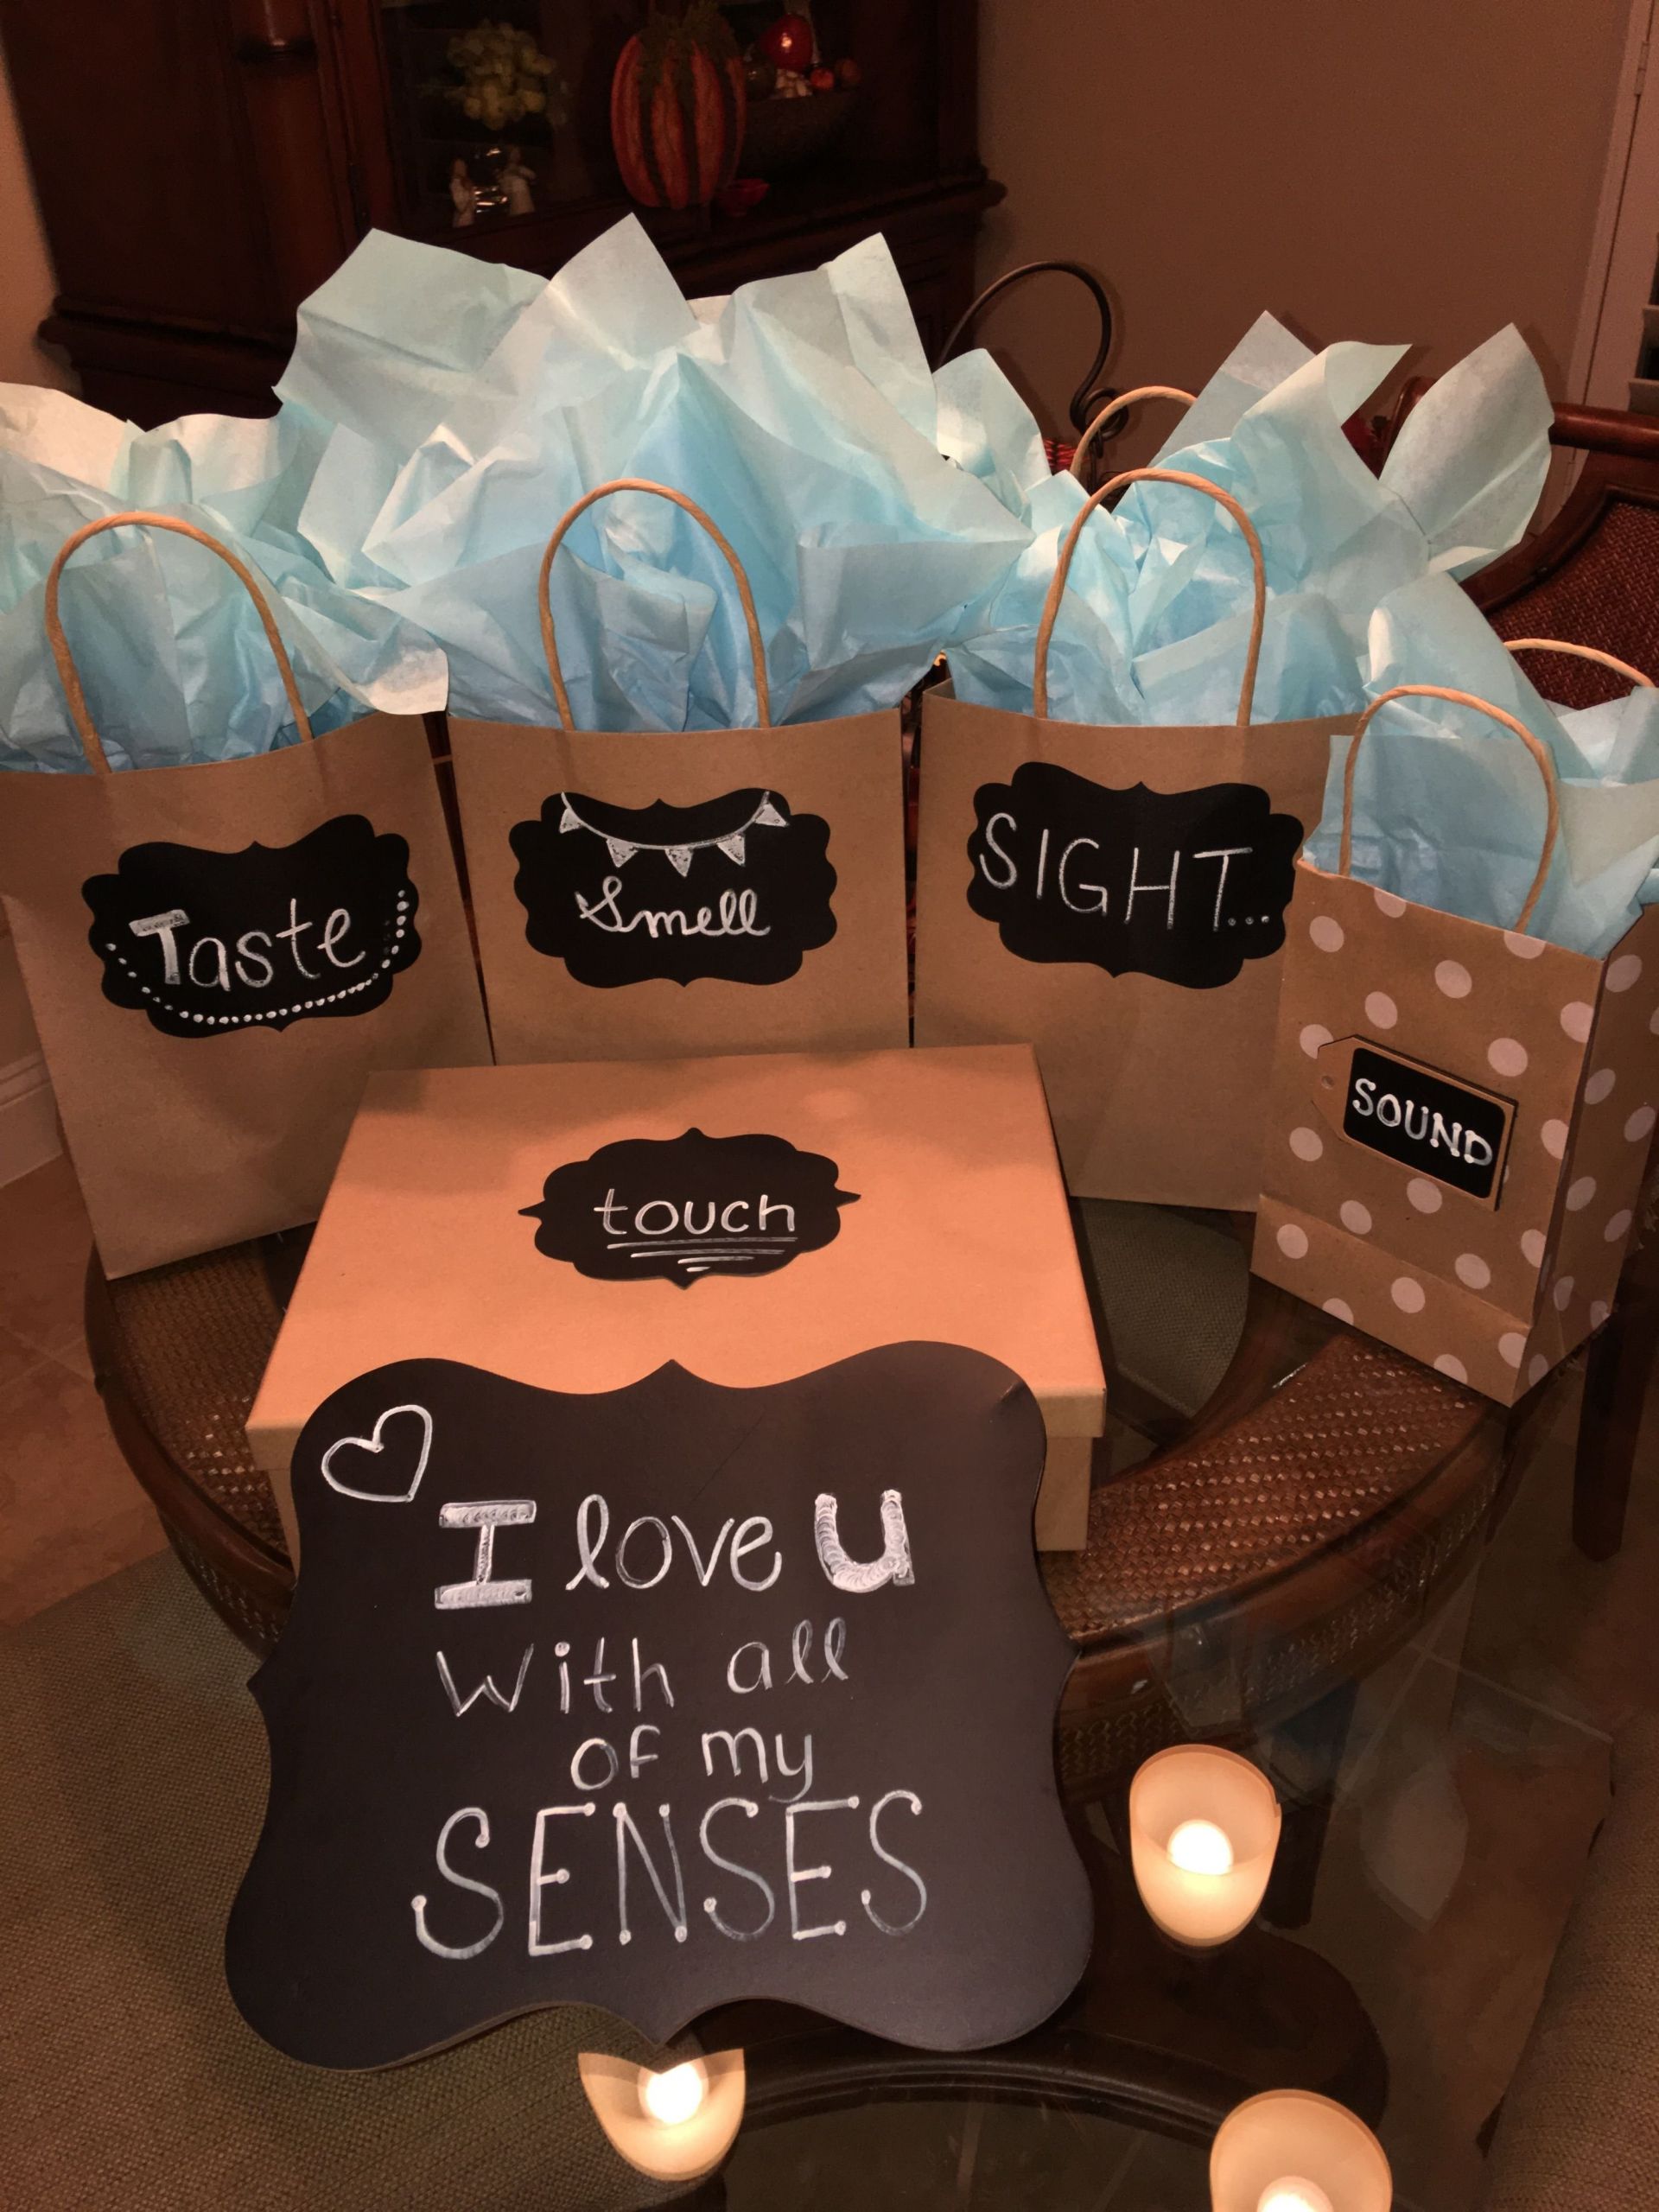 Cute Homemade Gift Ideas Boyfriend
 10 Lovable Romantic Birthday Gift Ideas Boyfriend 2020